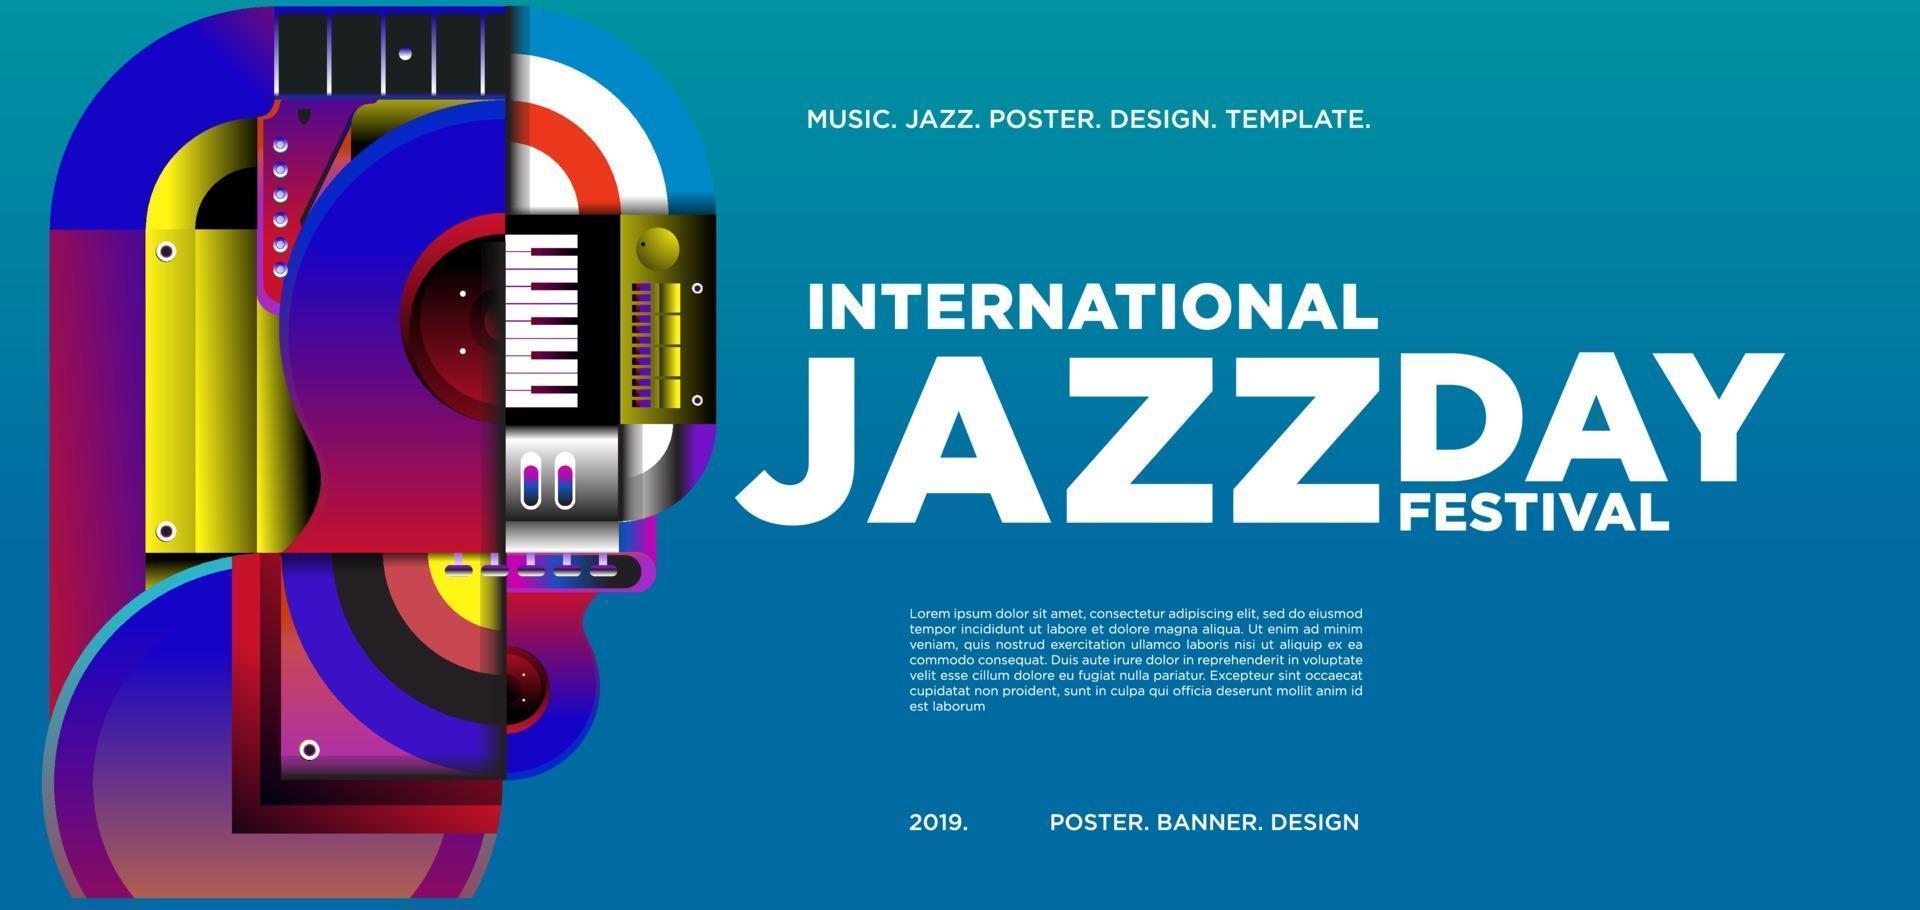 Vektor bunte internationale Jazz Tag Banner Design